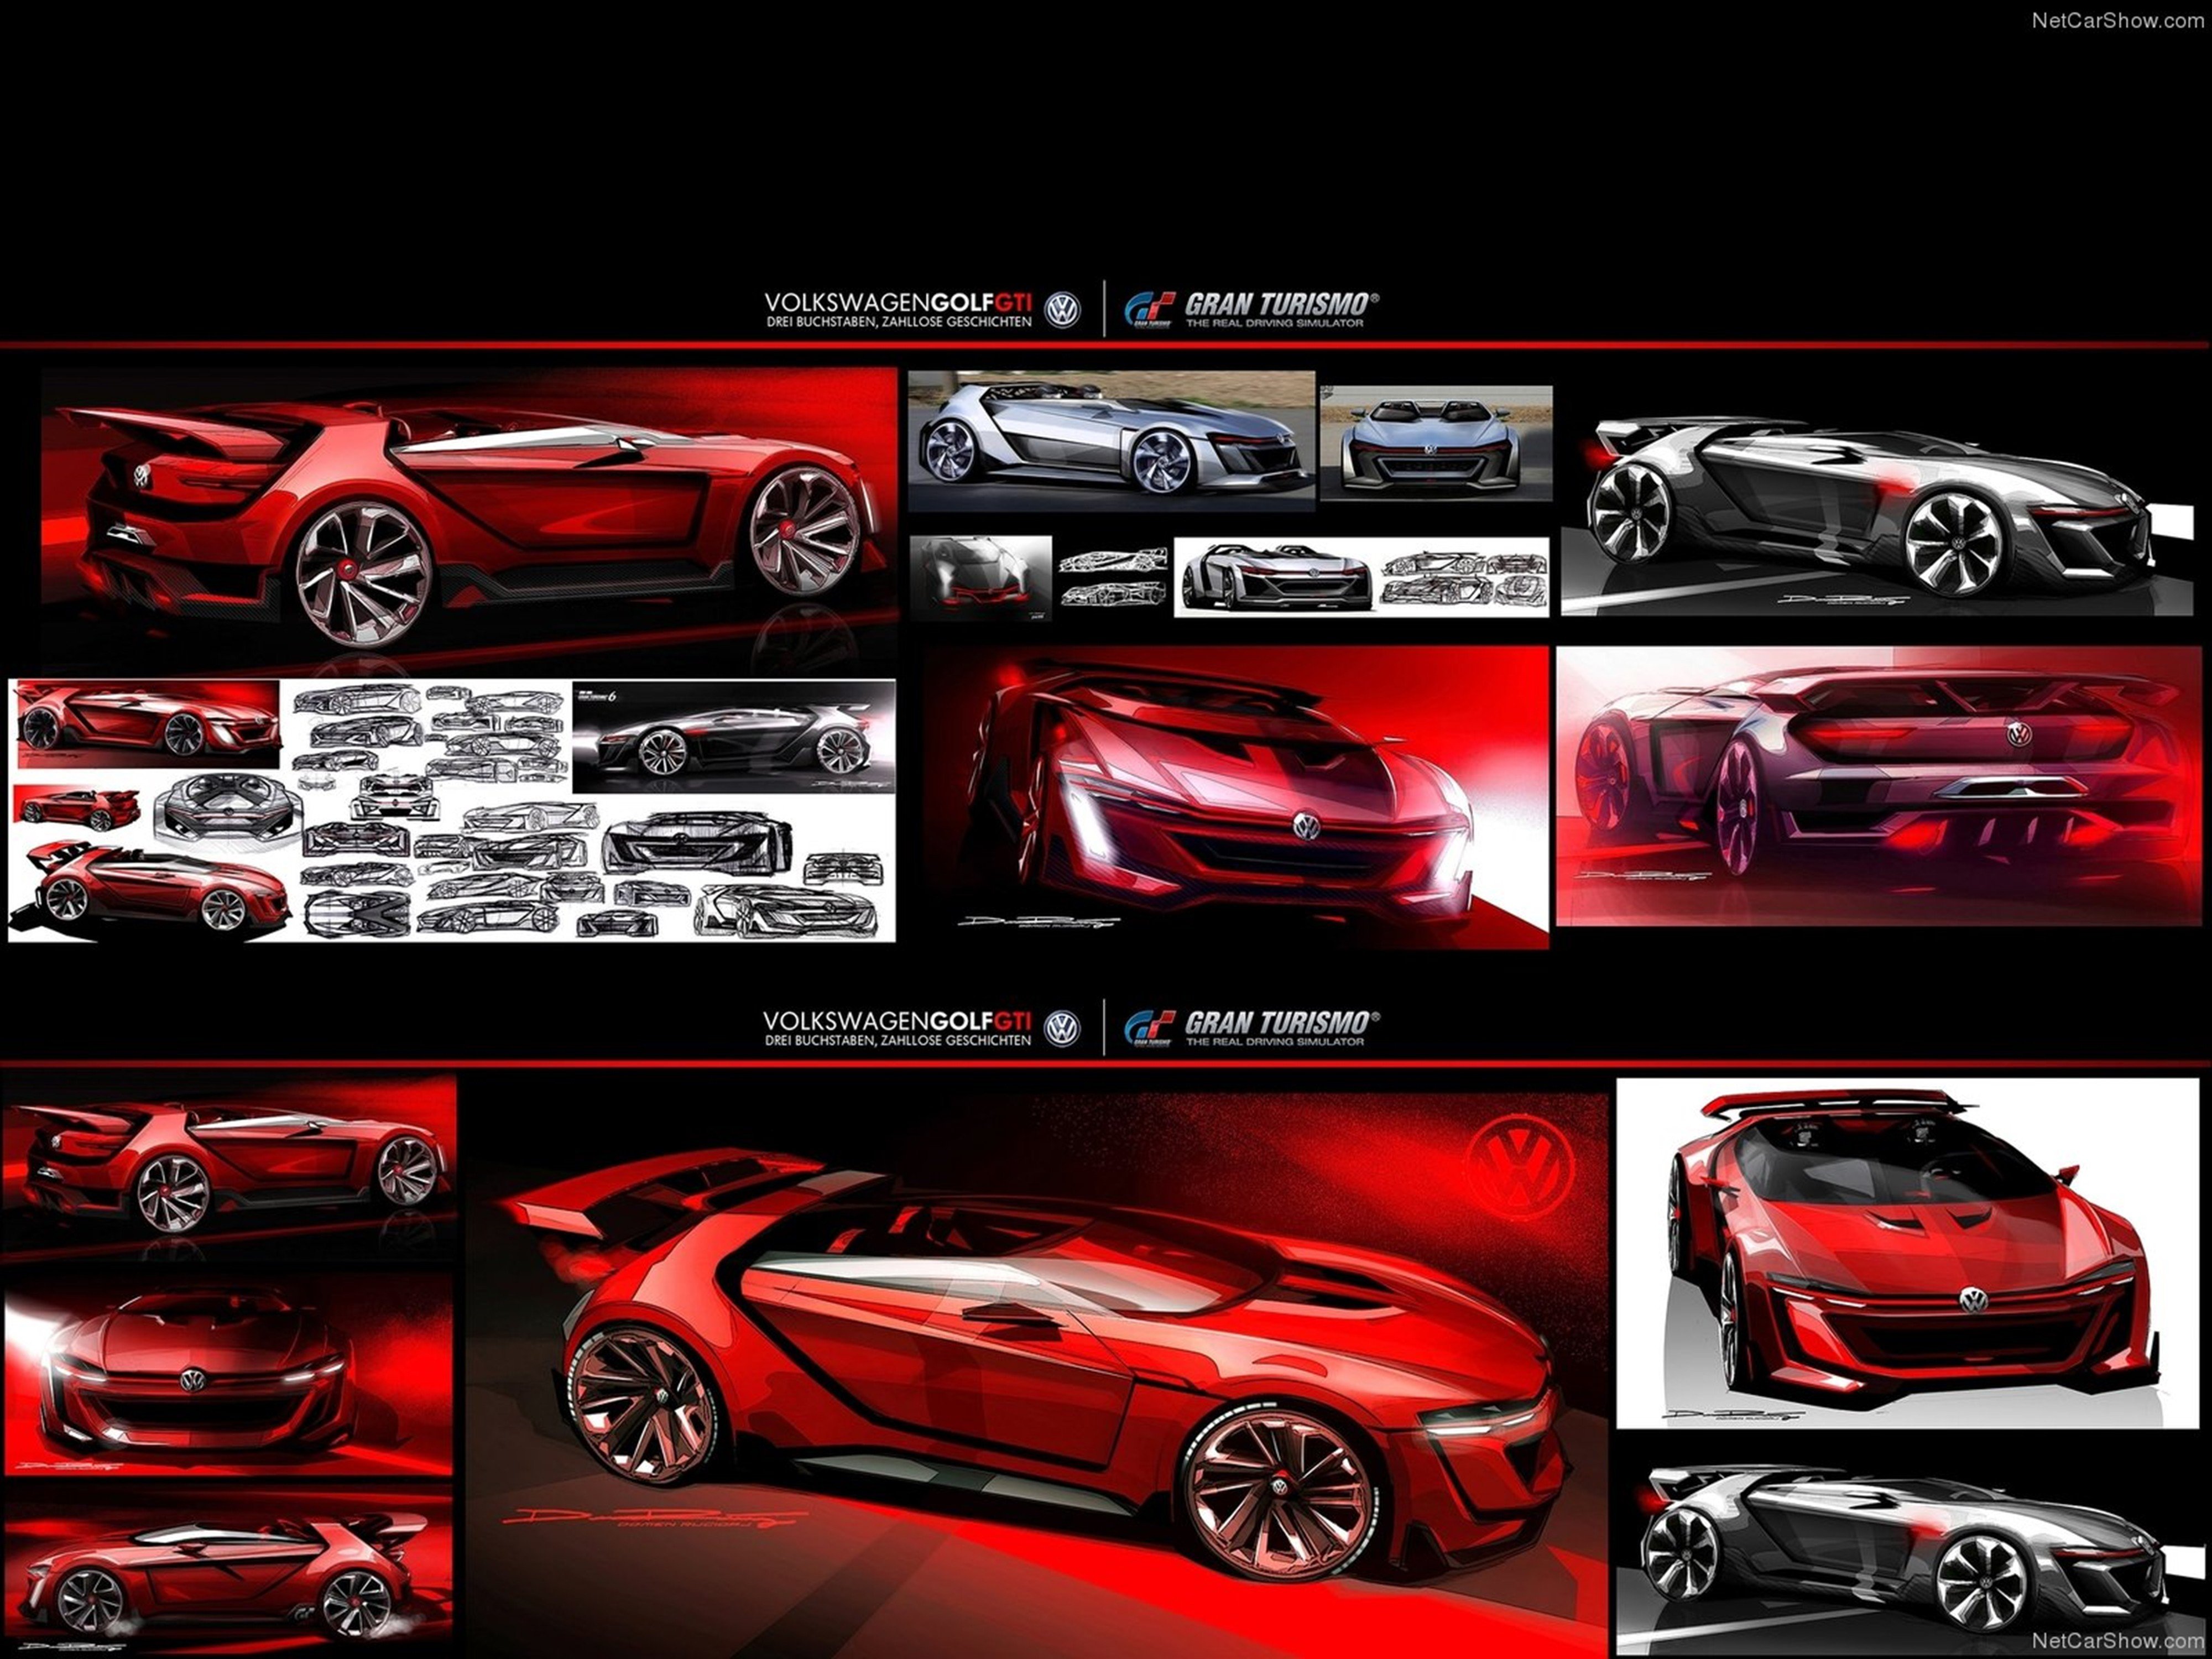 volkswagen, Gti, Roadster, Concept, 2014, Car, Supercar, Germany, Playstation, Wallpaper, Game, 4000x3000 Wallpaper